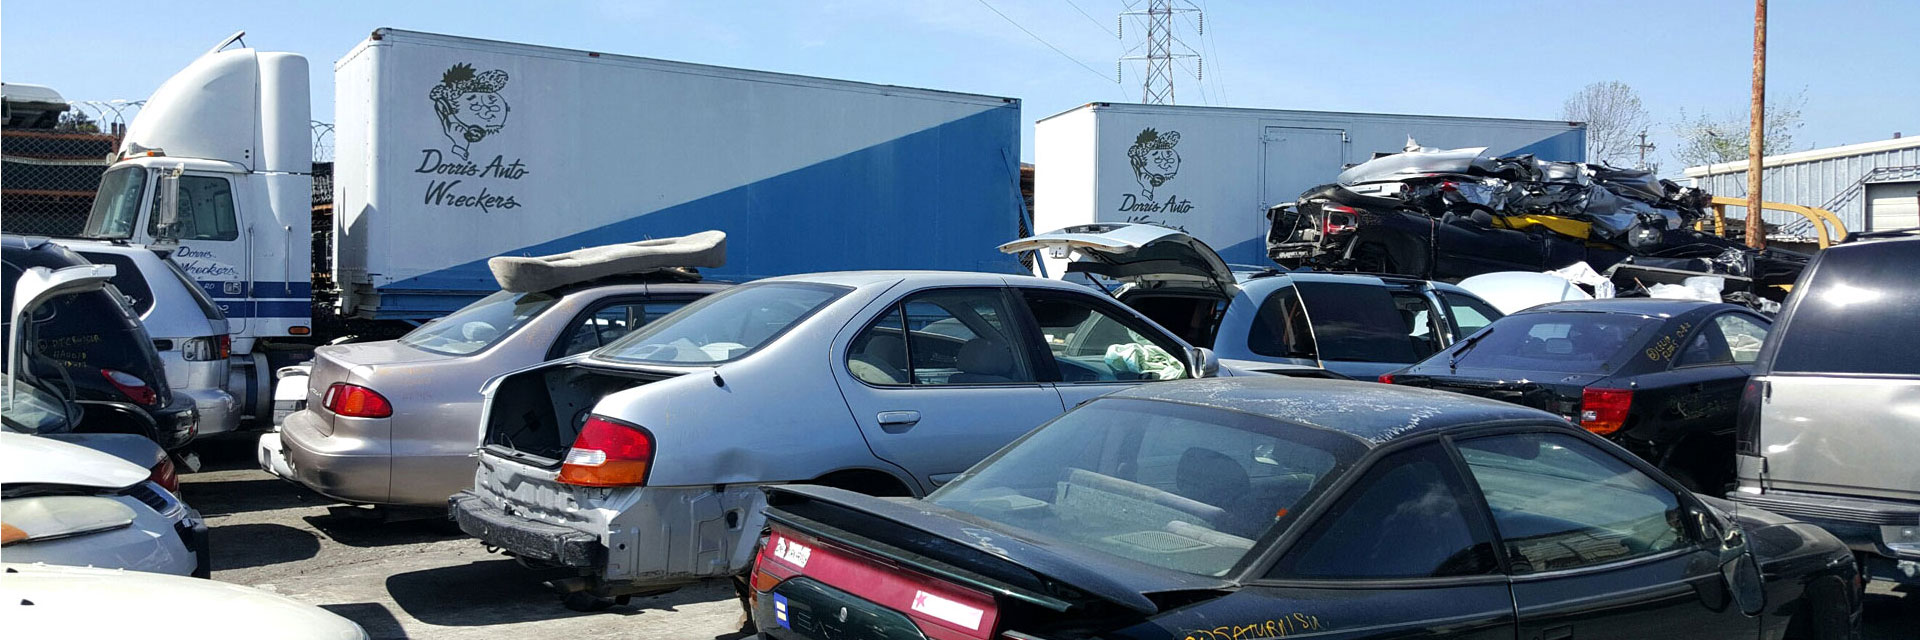 Salvage yard for Dorris Auto Wreckers of Hayward, CA